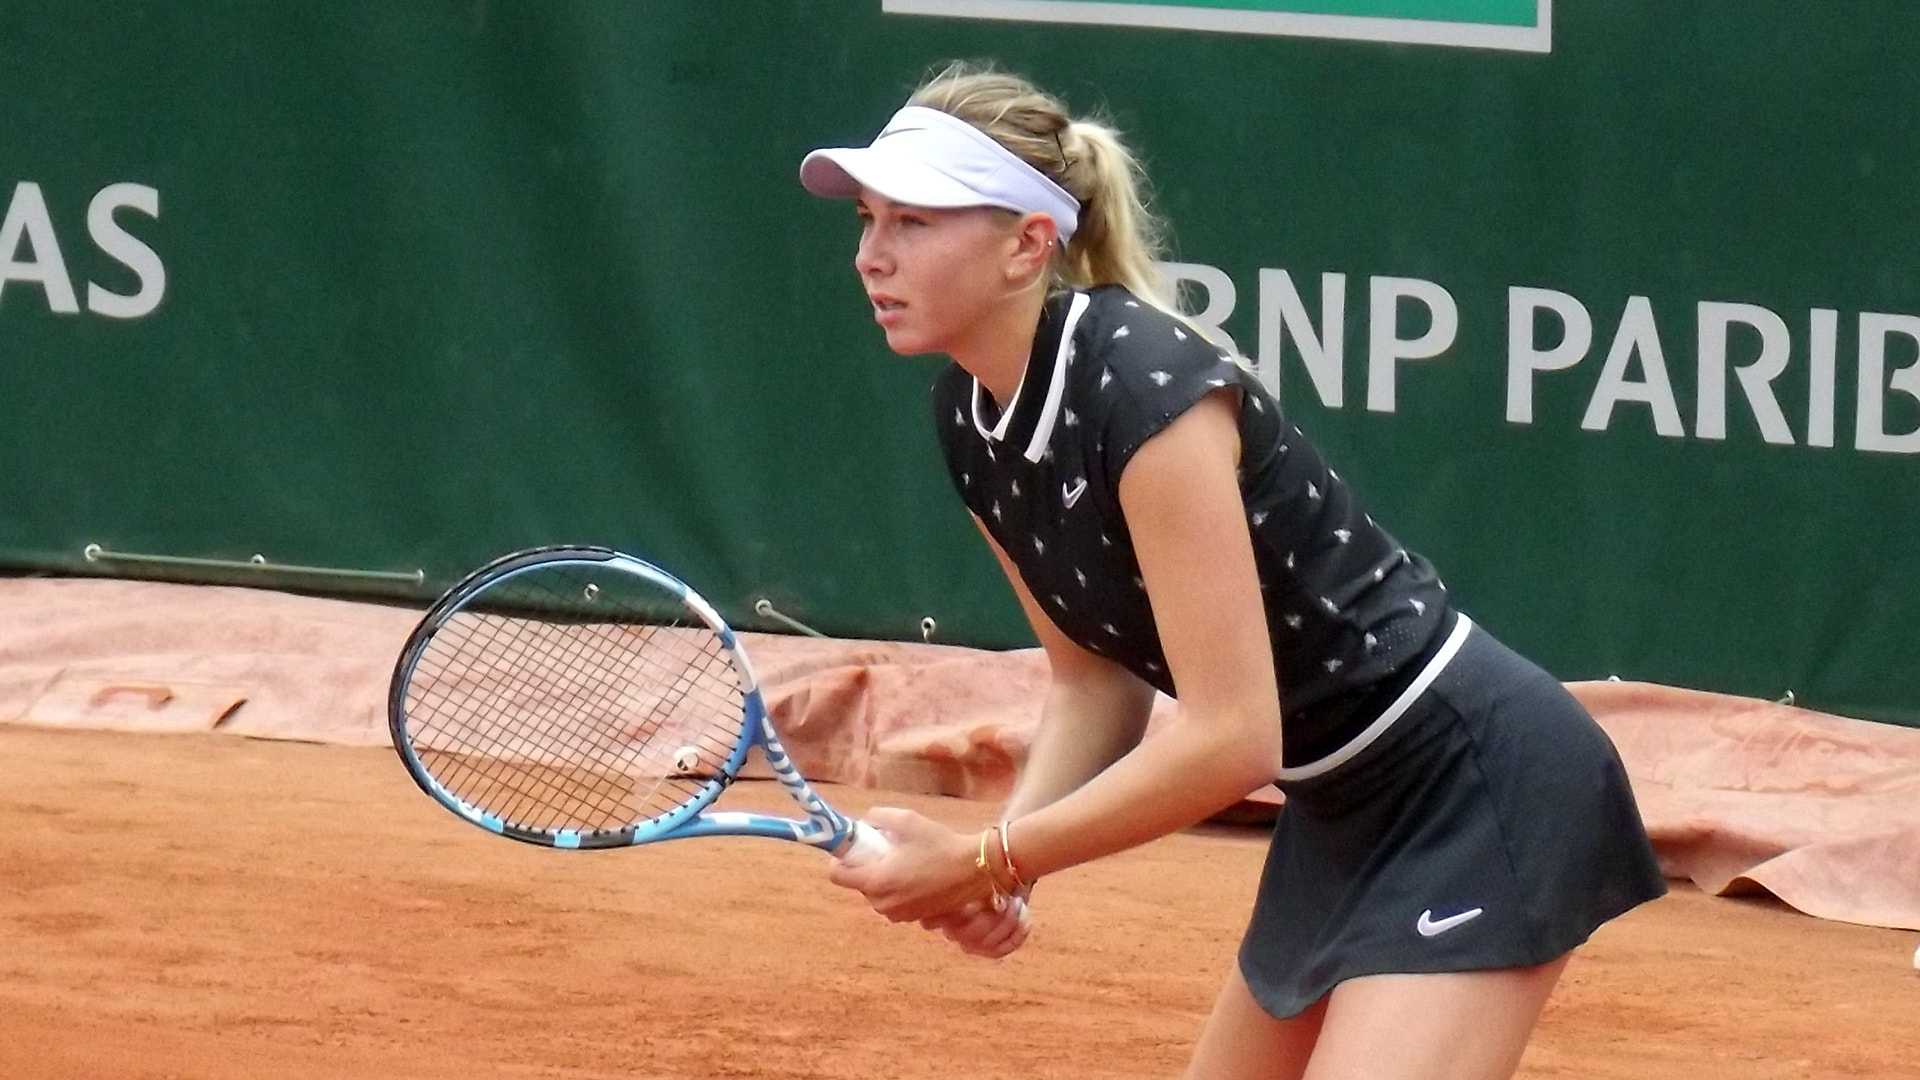 Amanda Anisimova at Roland Garros 2019